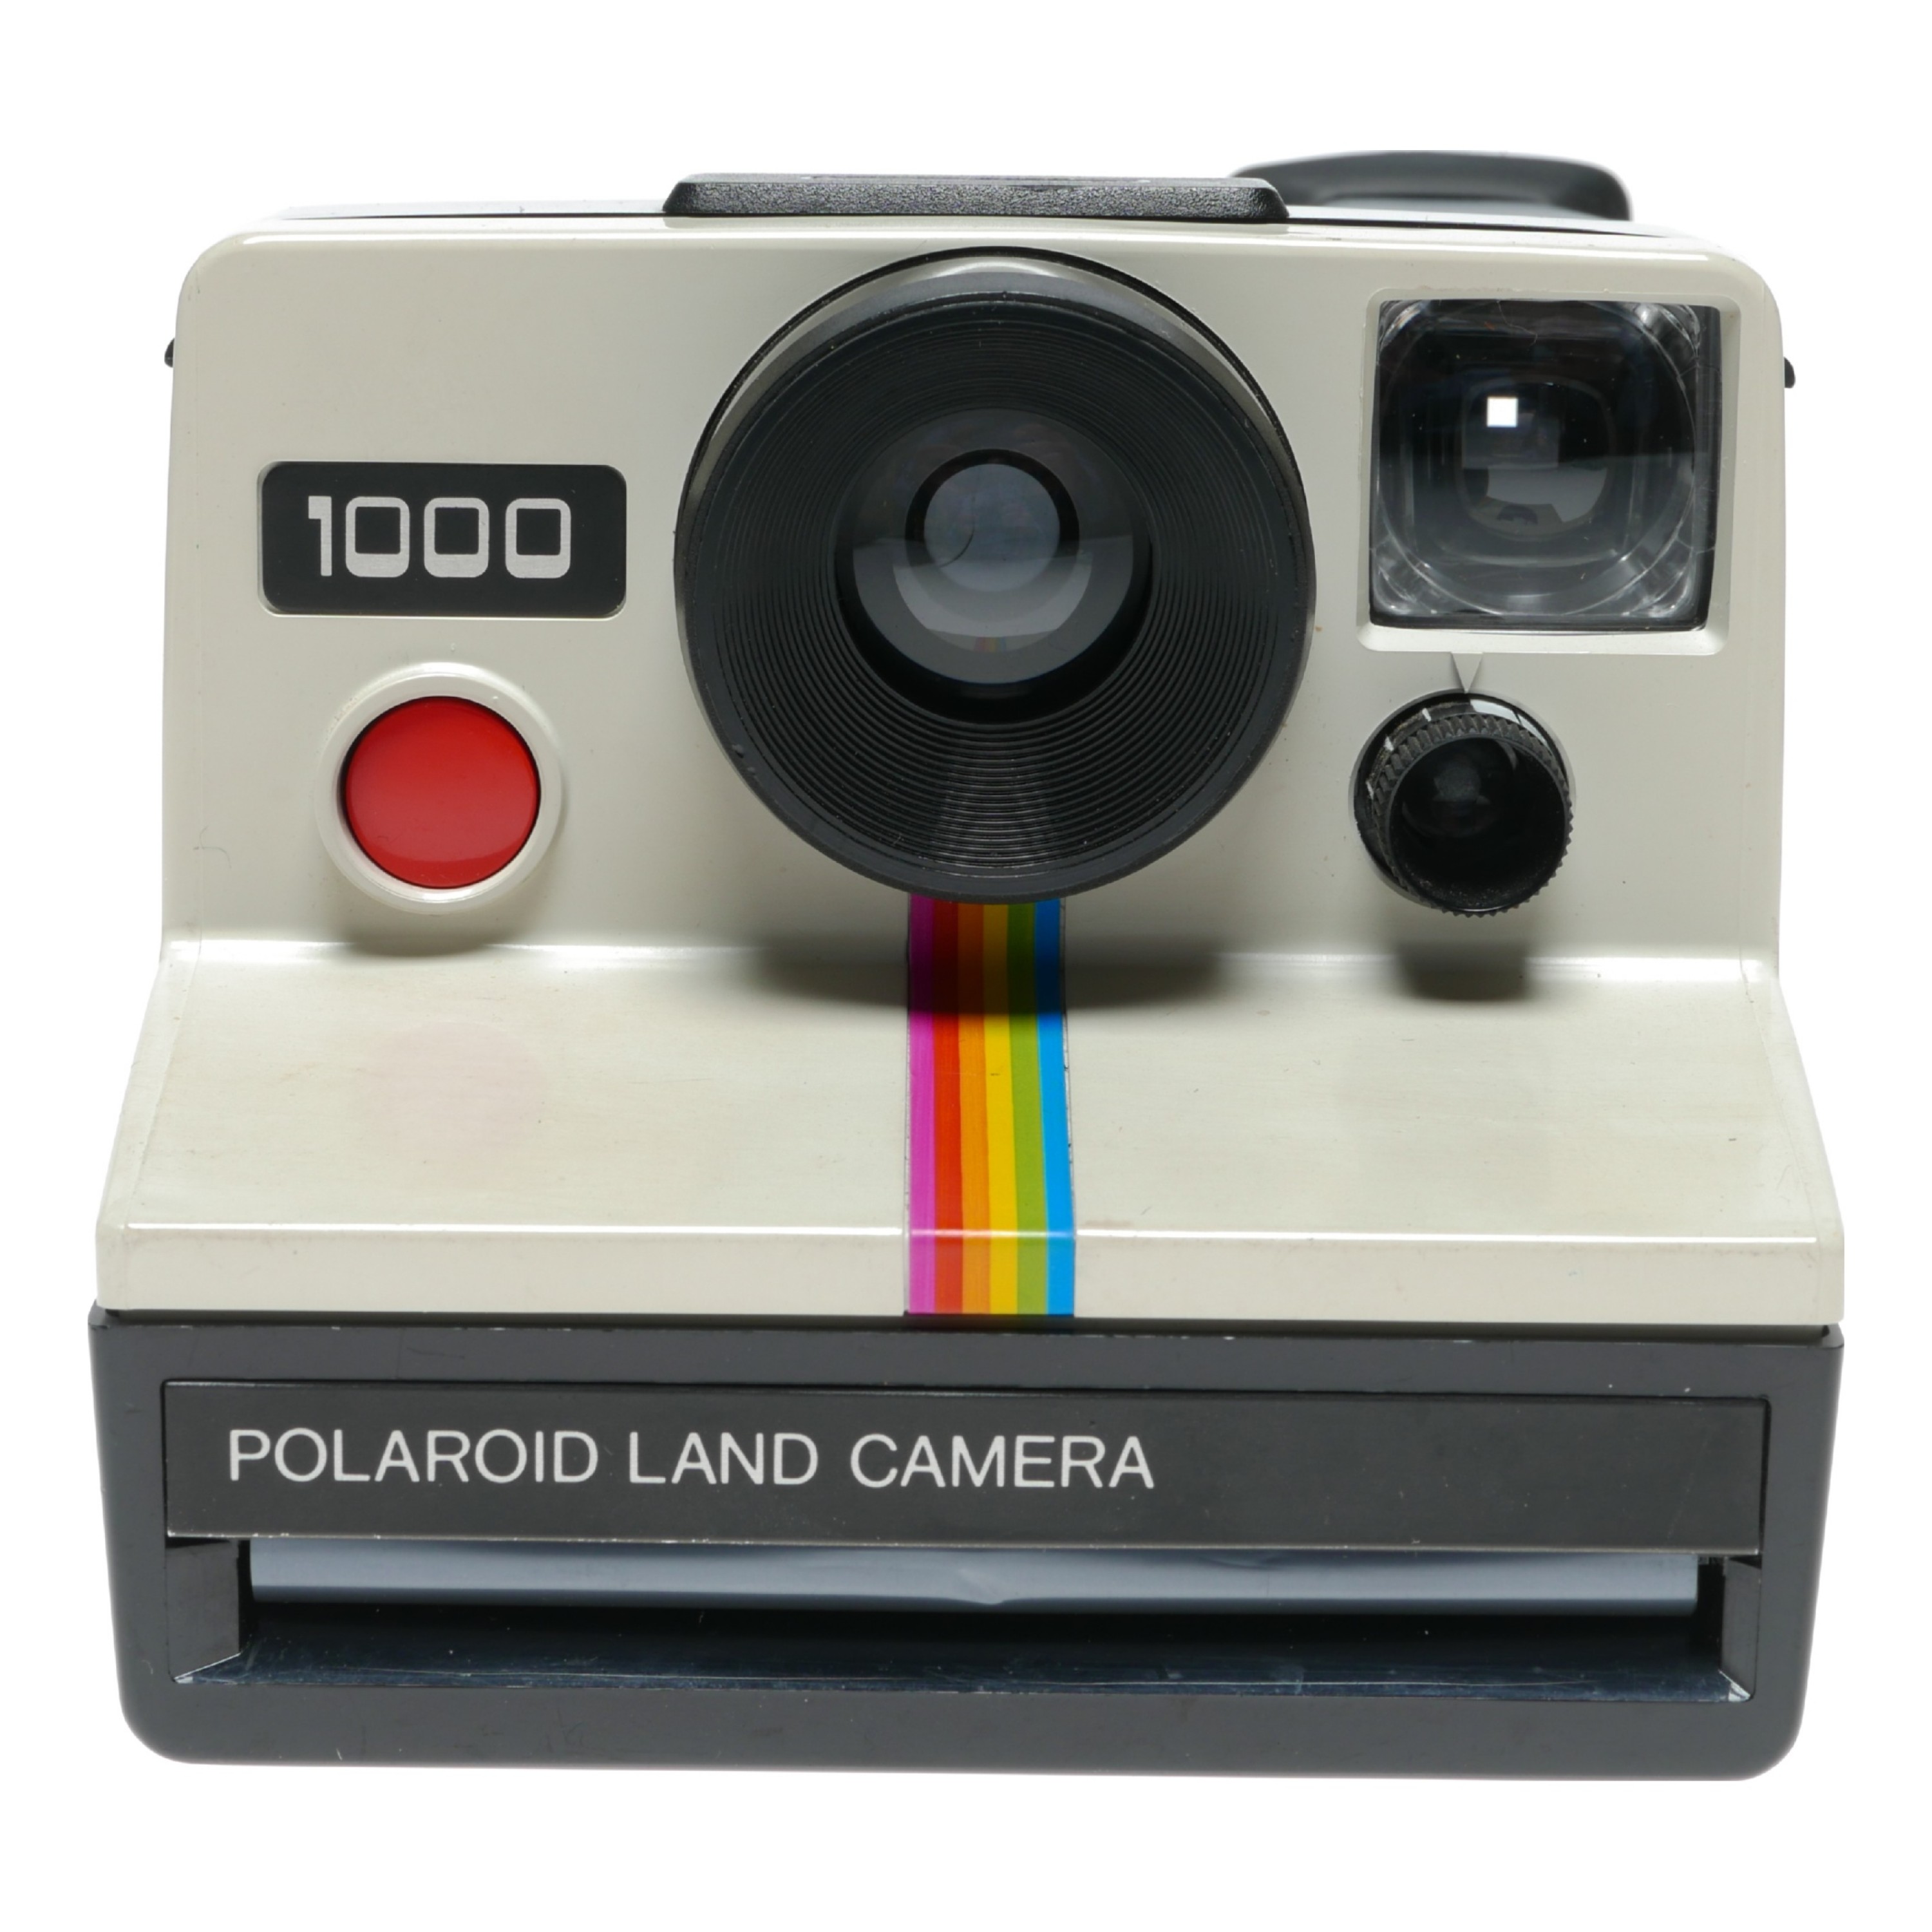 Productie Niet meer geldig Verwant Polaroid 1000 Land Camera SX-70 Instant Pack Film Camera